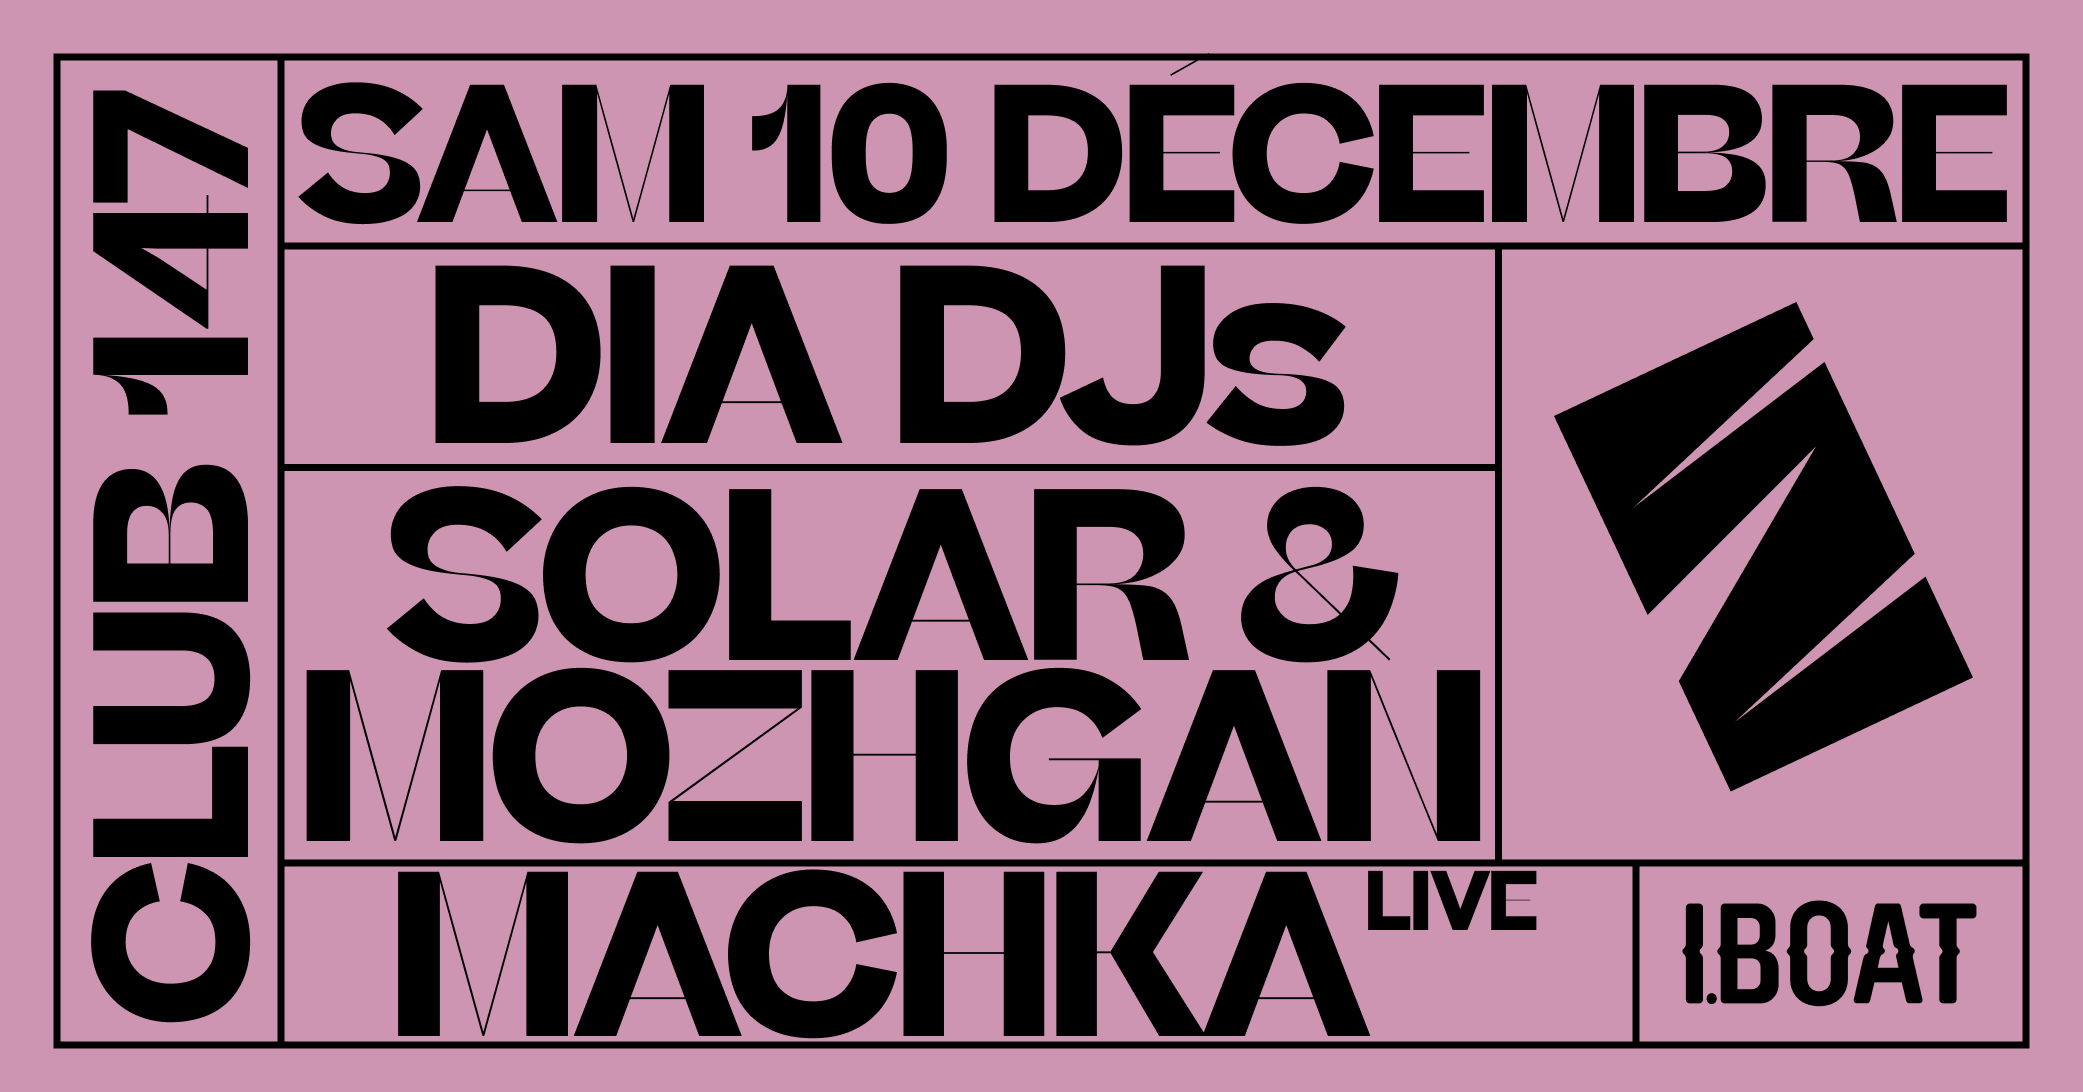 DIA DJS, Machka (LIVE), Solar & Mozhgan - Página frontal